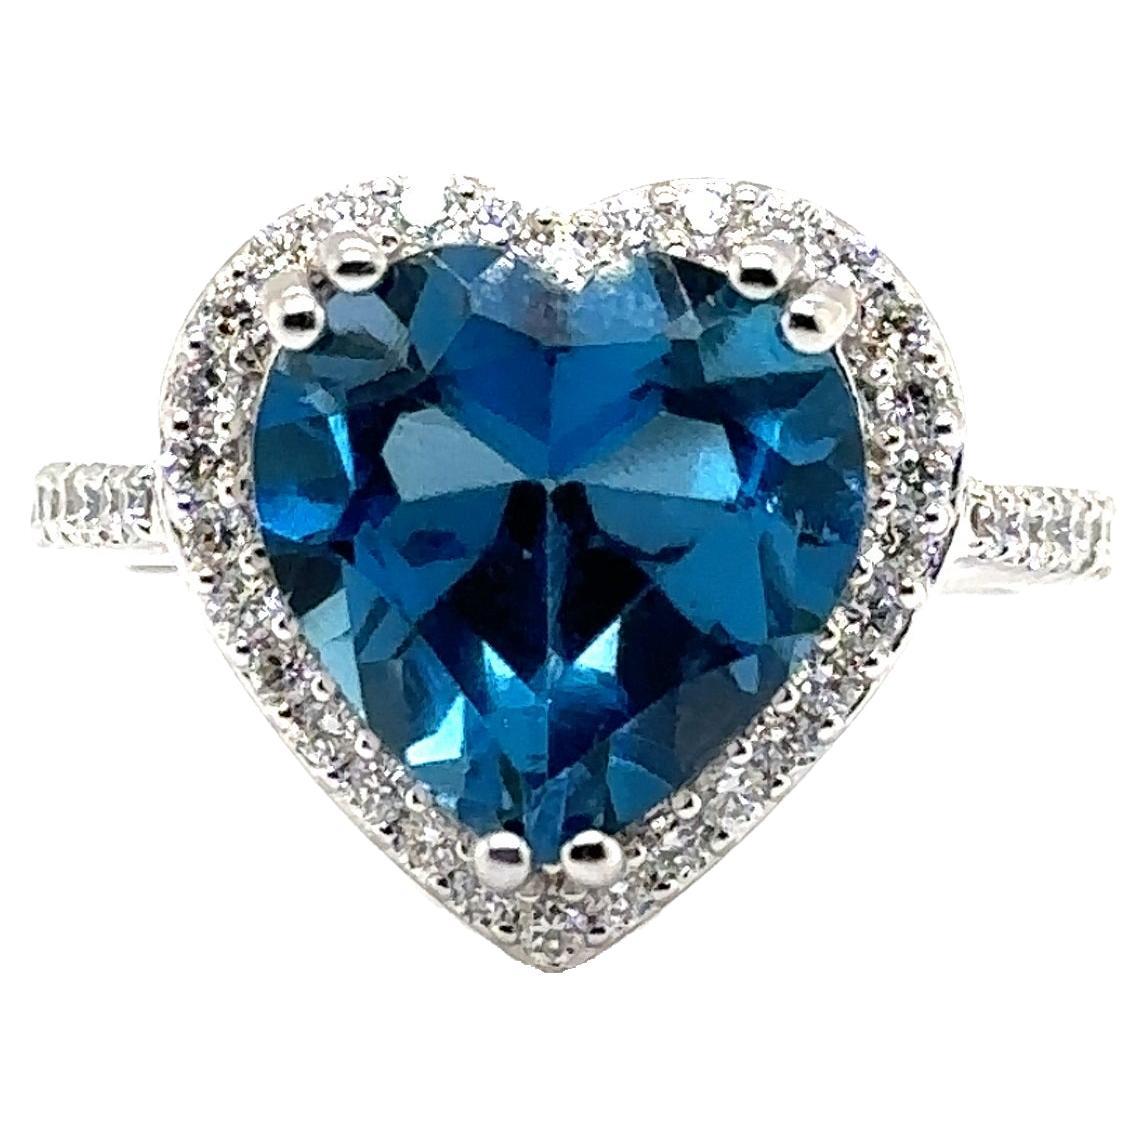 JAS-21-2259 - 14K WG 0.75Ct GH-SI1 DIAMONDS & 12MM HEART SHAPE LONDON BLUE TOPAZ For Sale